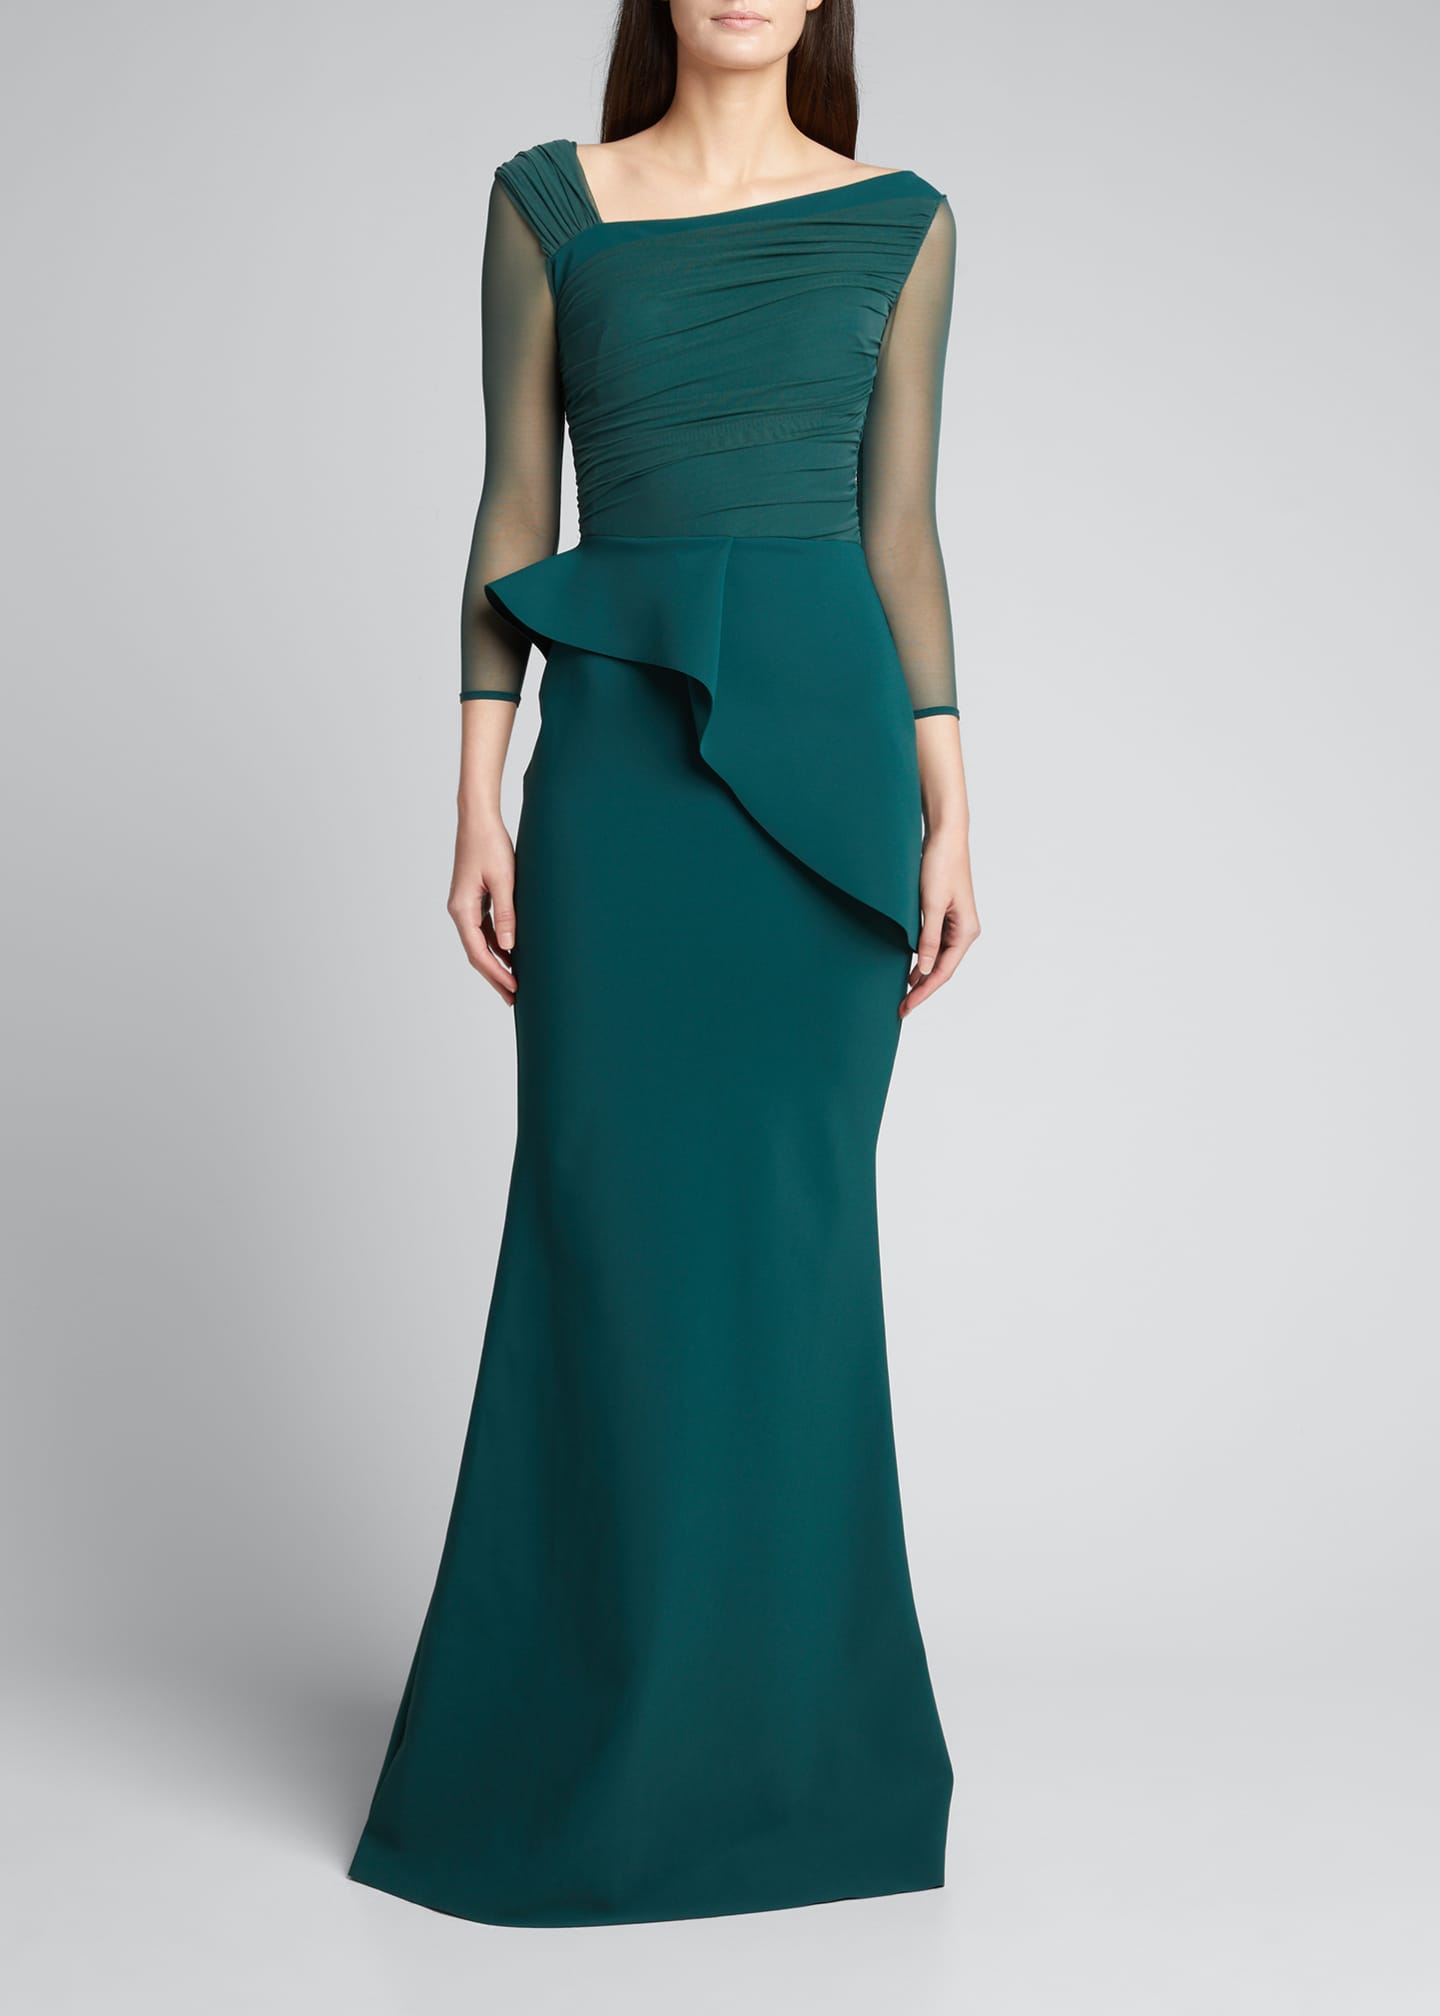 Chiara Boni La Petite Robe Rippy Asymmetrical 3/4-Sleeve Illusion Gown ...